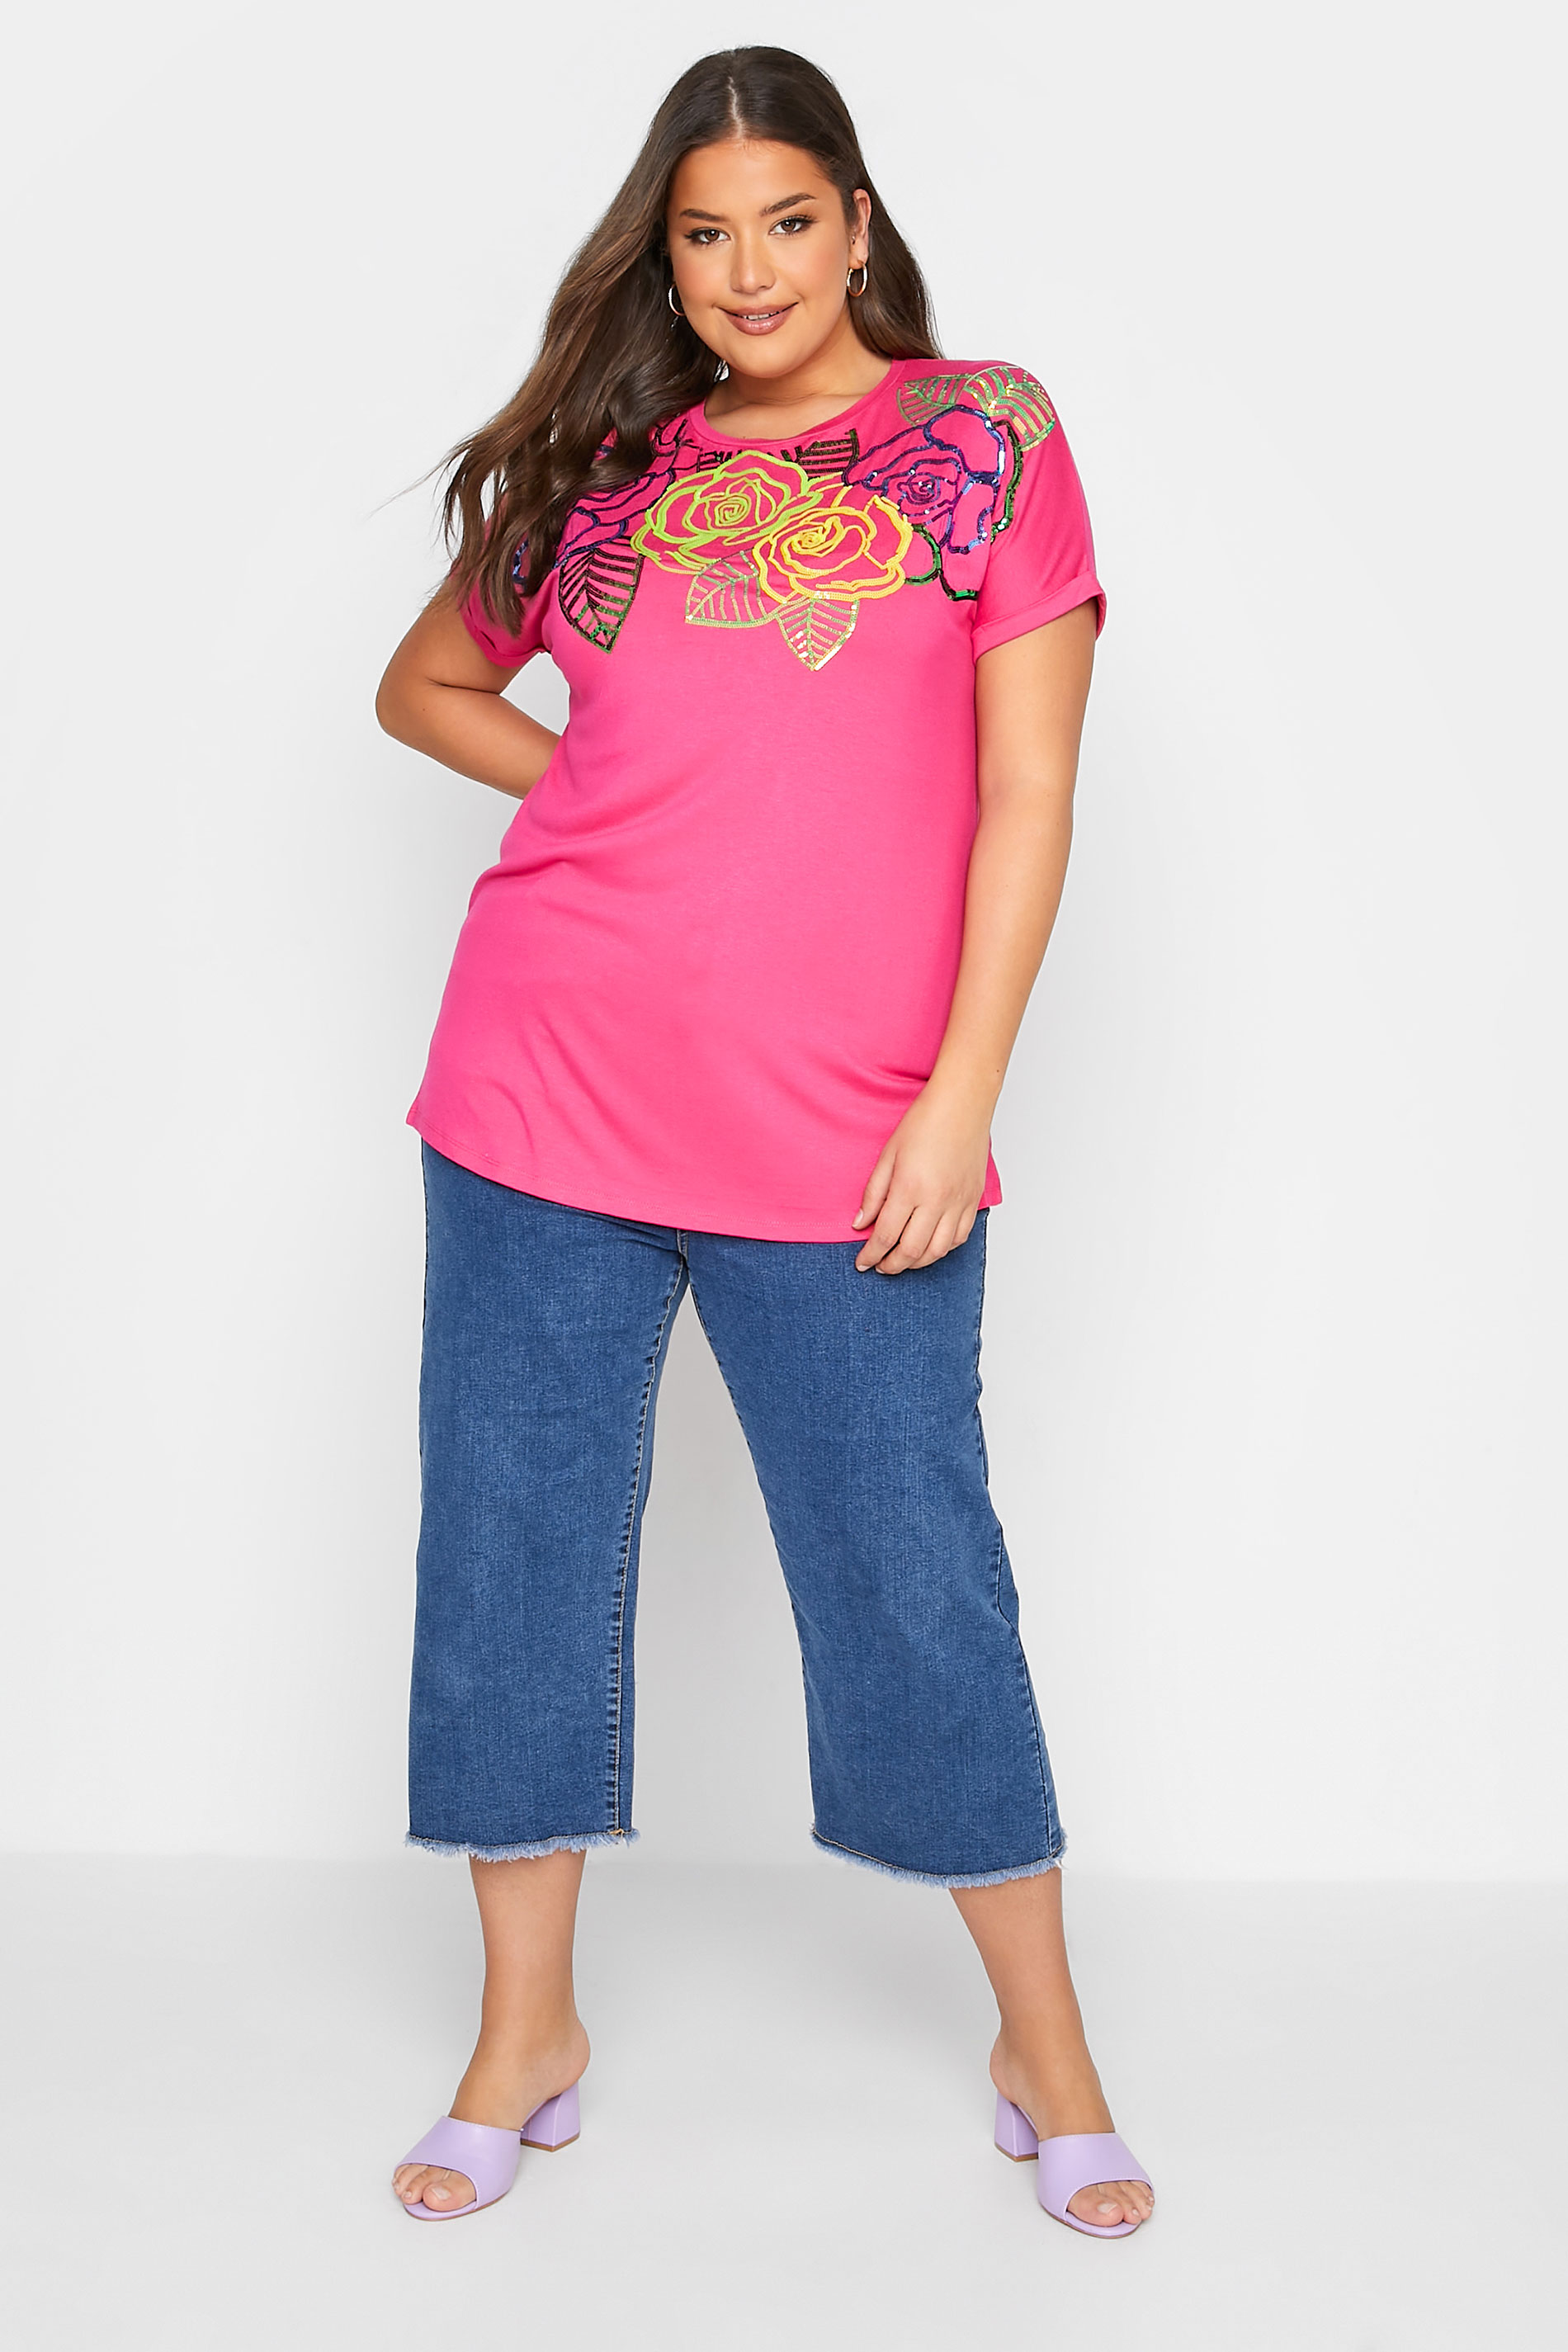 Grande taille  Tops Grande taille  T-Shirts | Curve Hot Pink Floral Embellished Sequin T-Shirt - GW12004